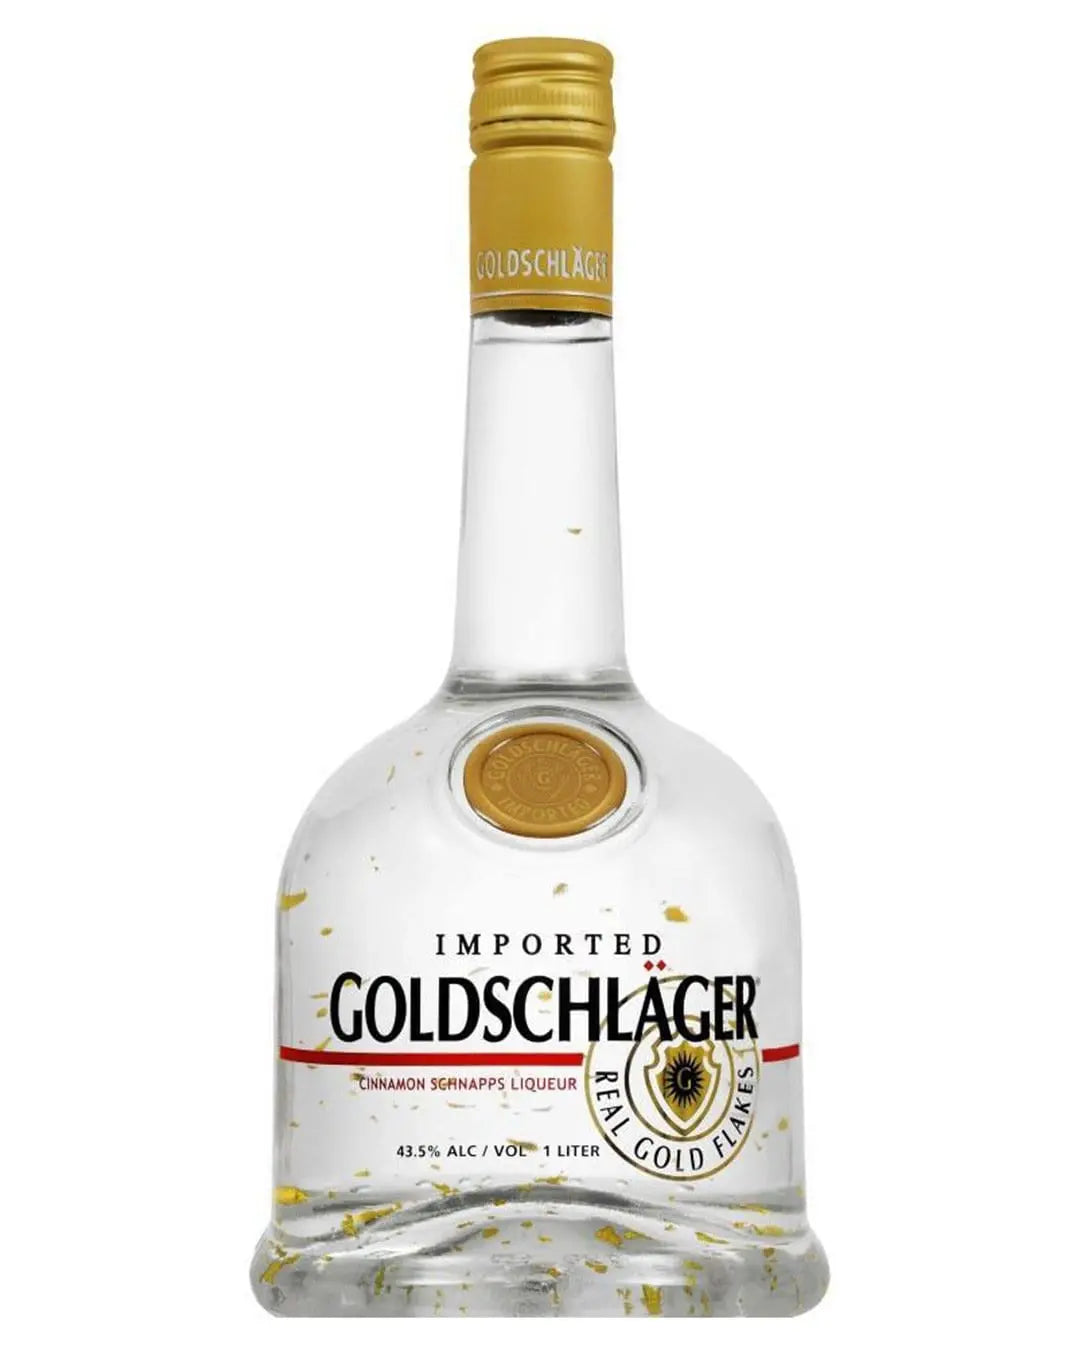 Goldschläger Cinnamon Schnapps Liqueur, 1 L Liqueurs & Other Spirits